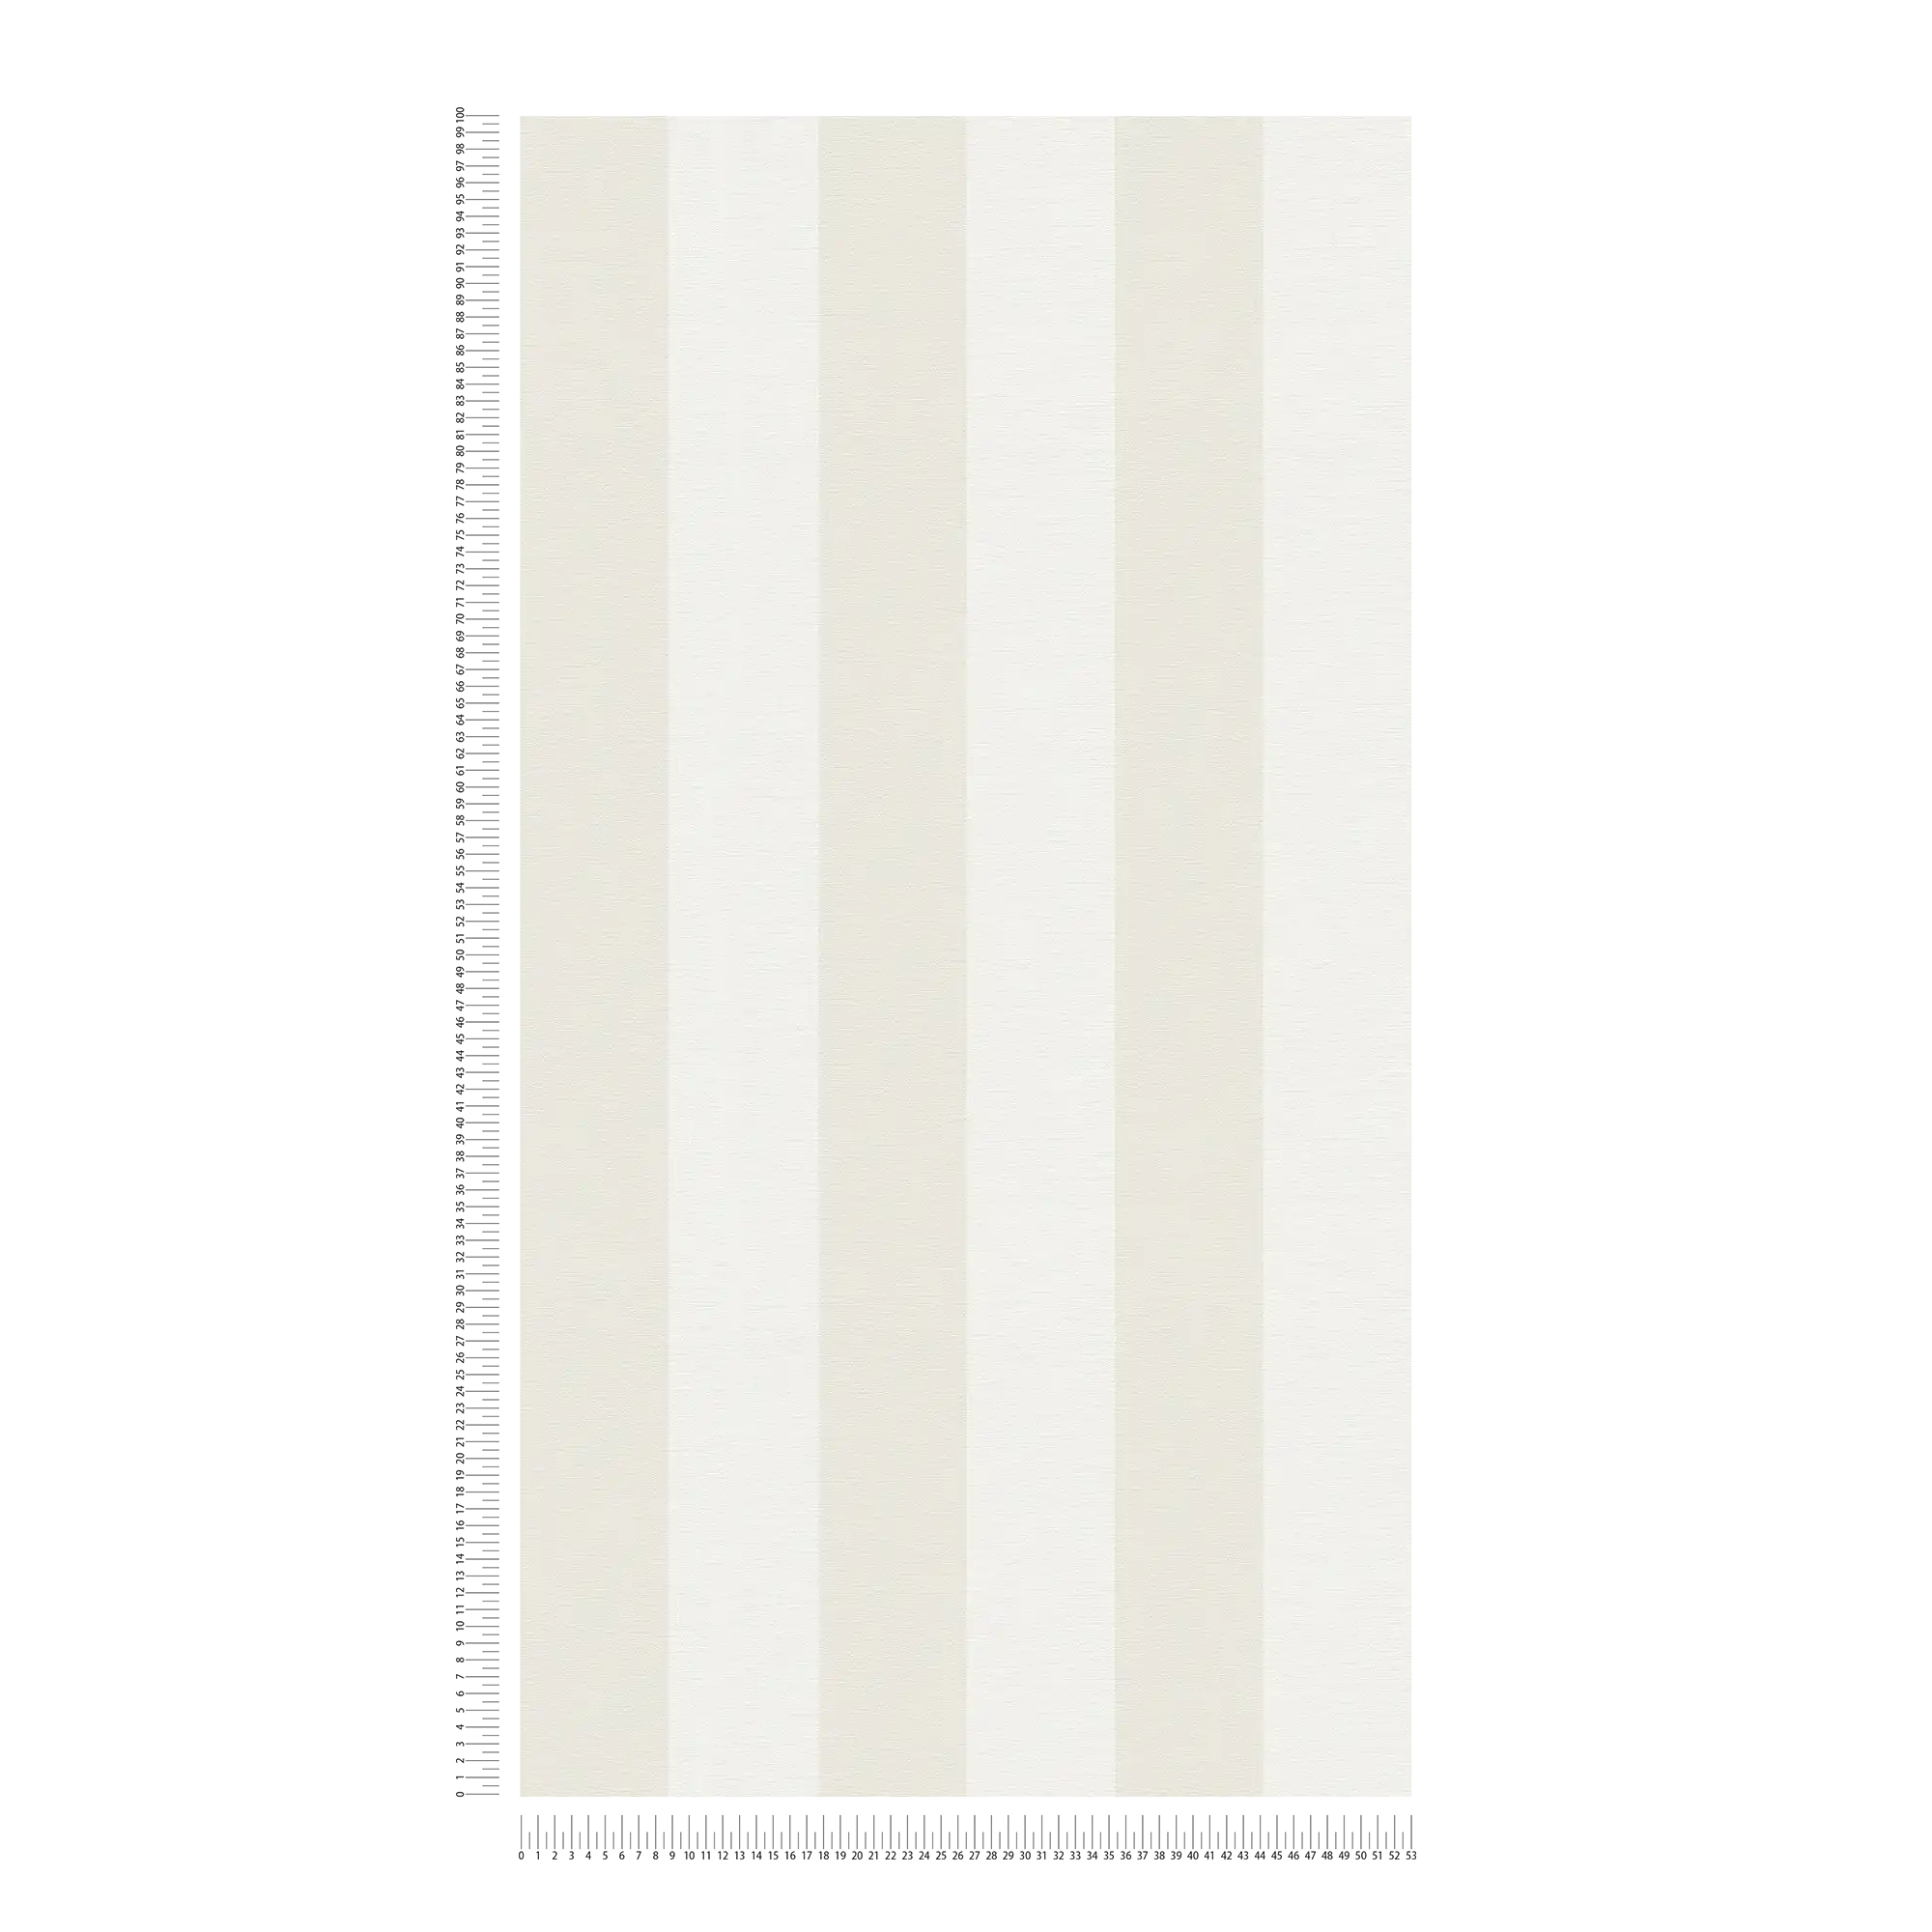             Papel pintado de rayas en bloque con aspecto textil para un diseño joven - beige, blanco
        